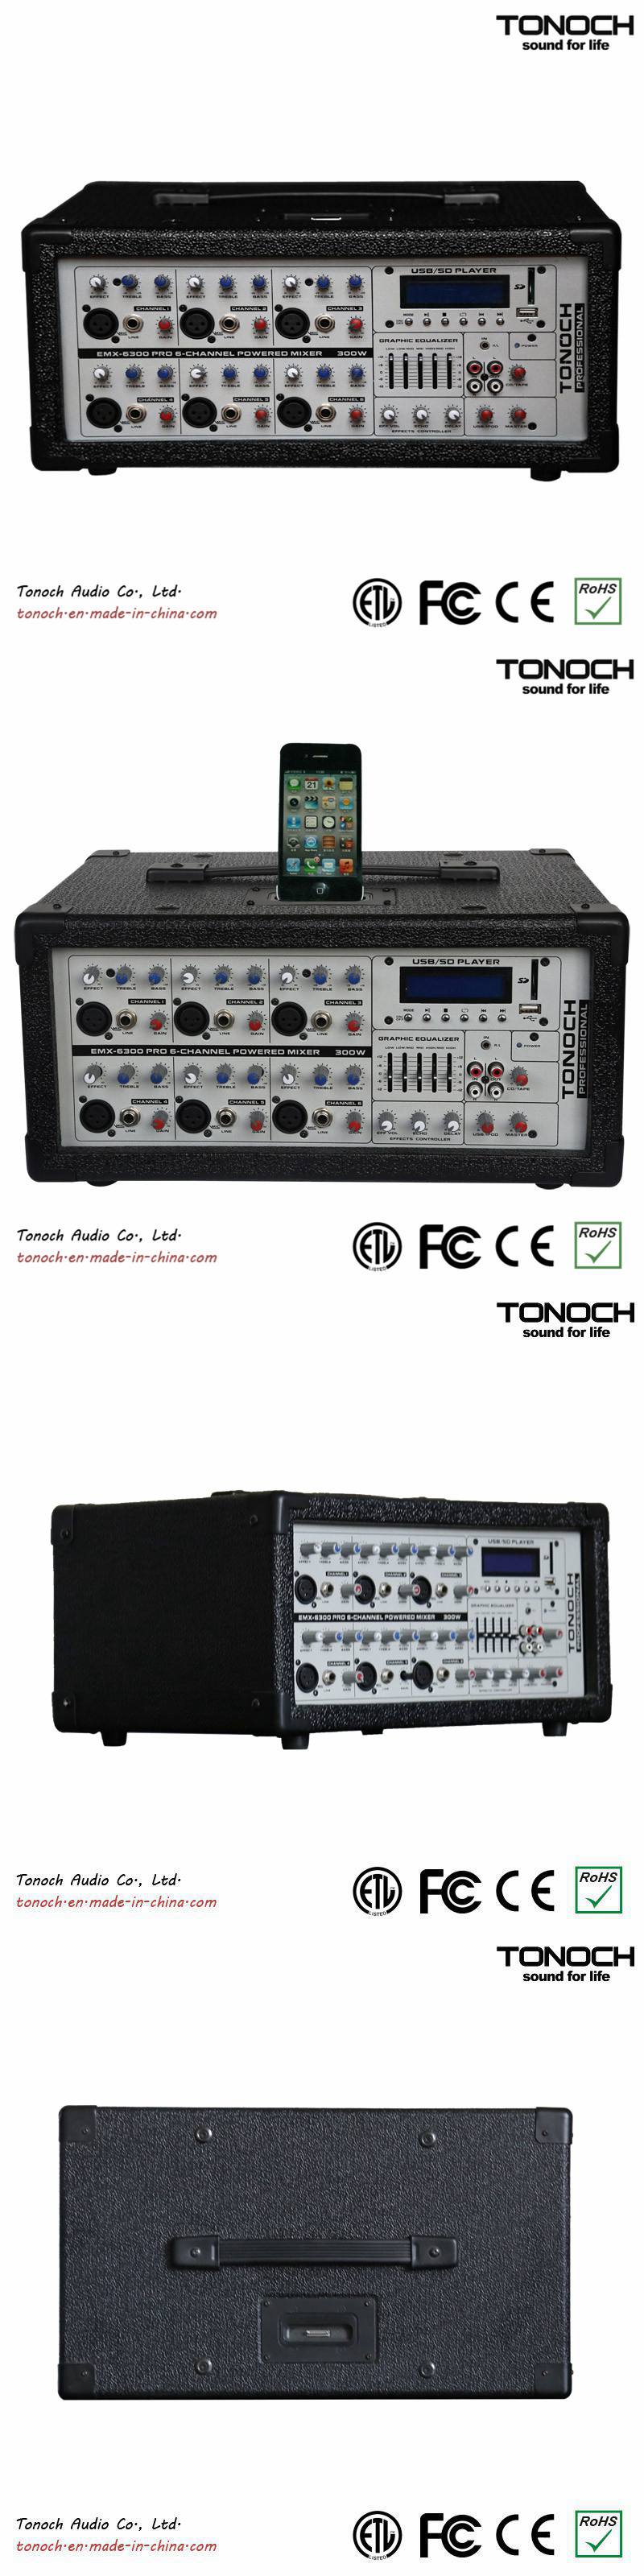 Tonoch 6 Channels Power Box PA Mixer